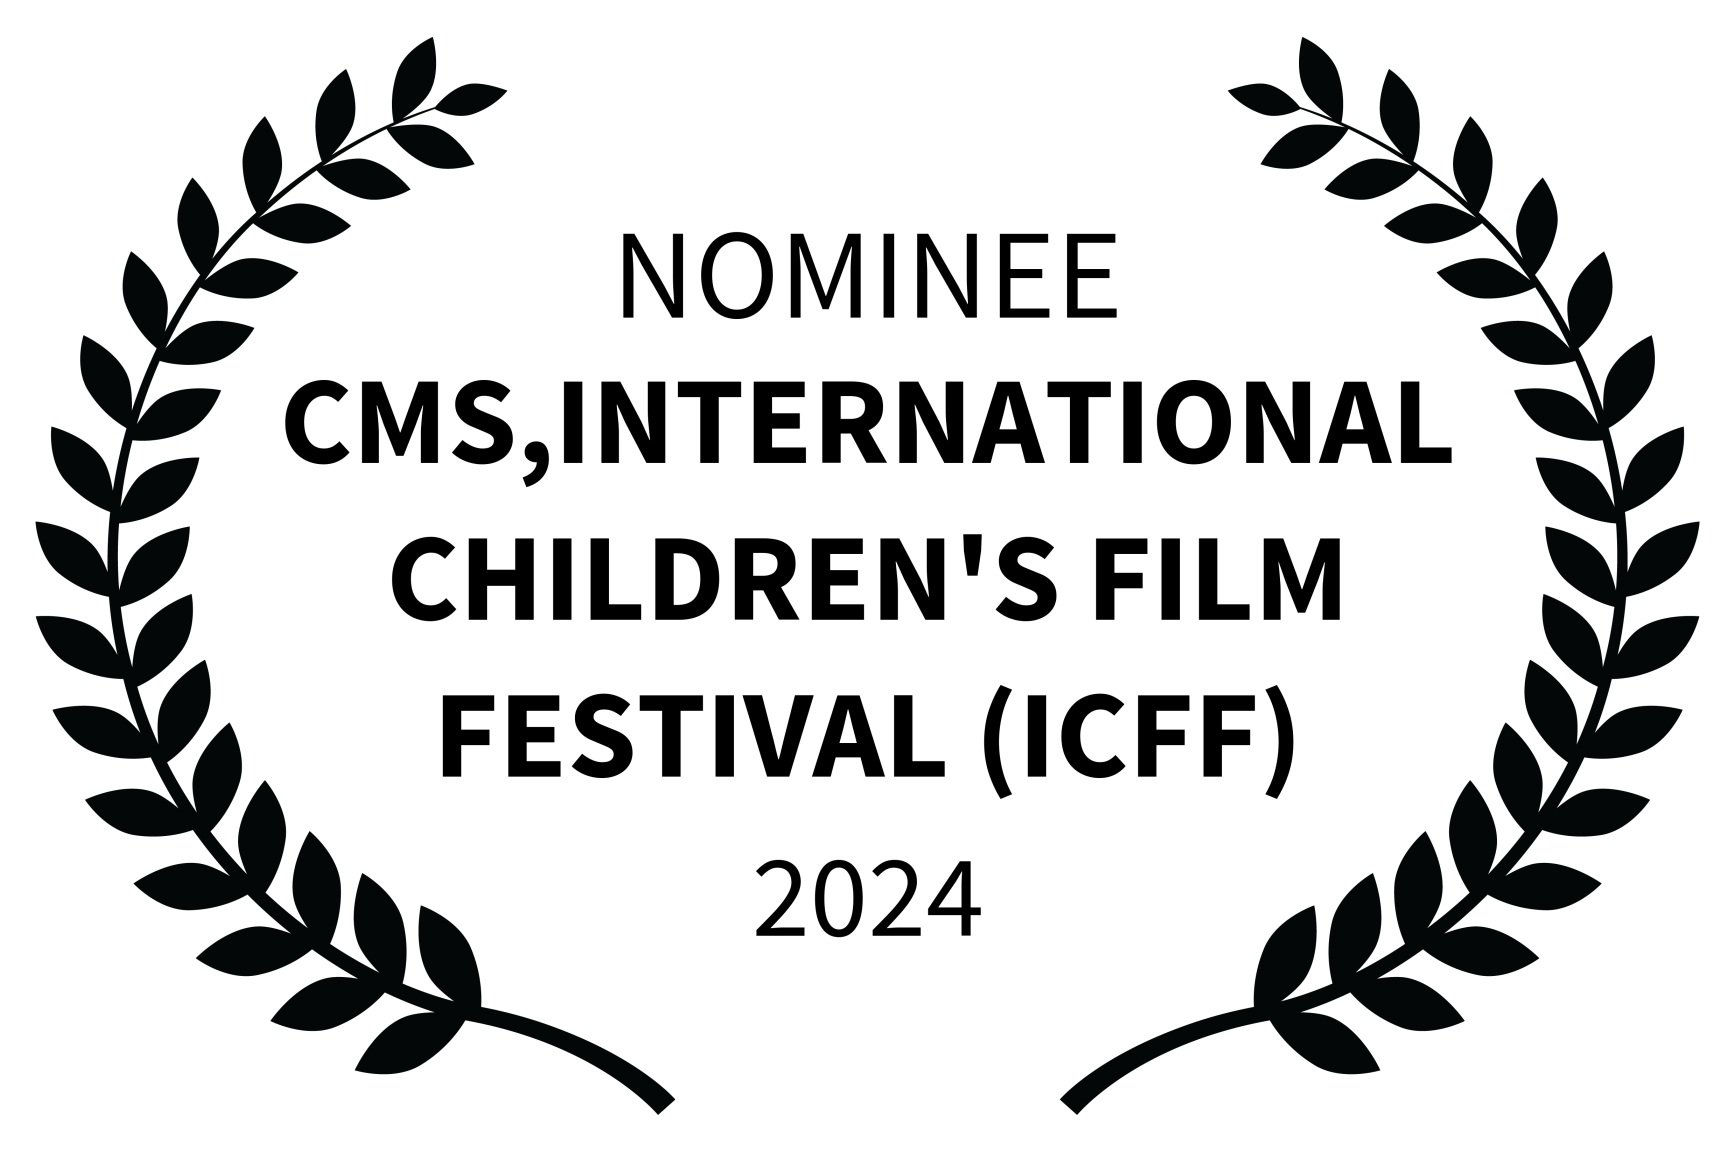 NOMINEE+-+CMSINTERNATIONAL+CHILDRENS+FILM+FESTIVAL+ICFF+-+2024.jpg